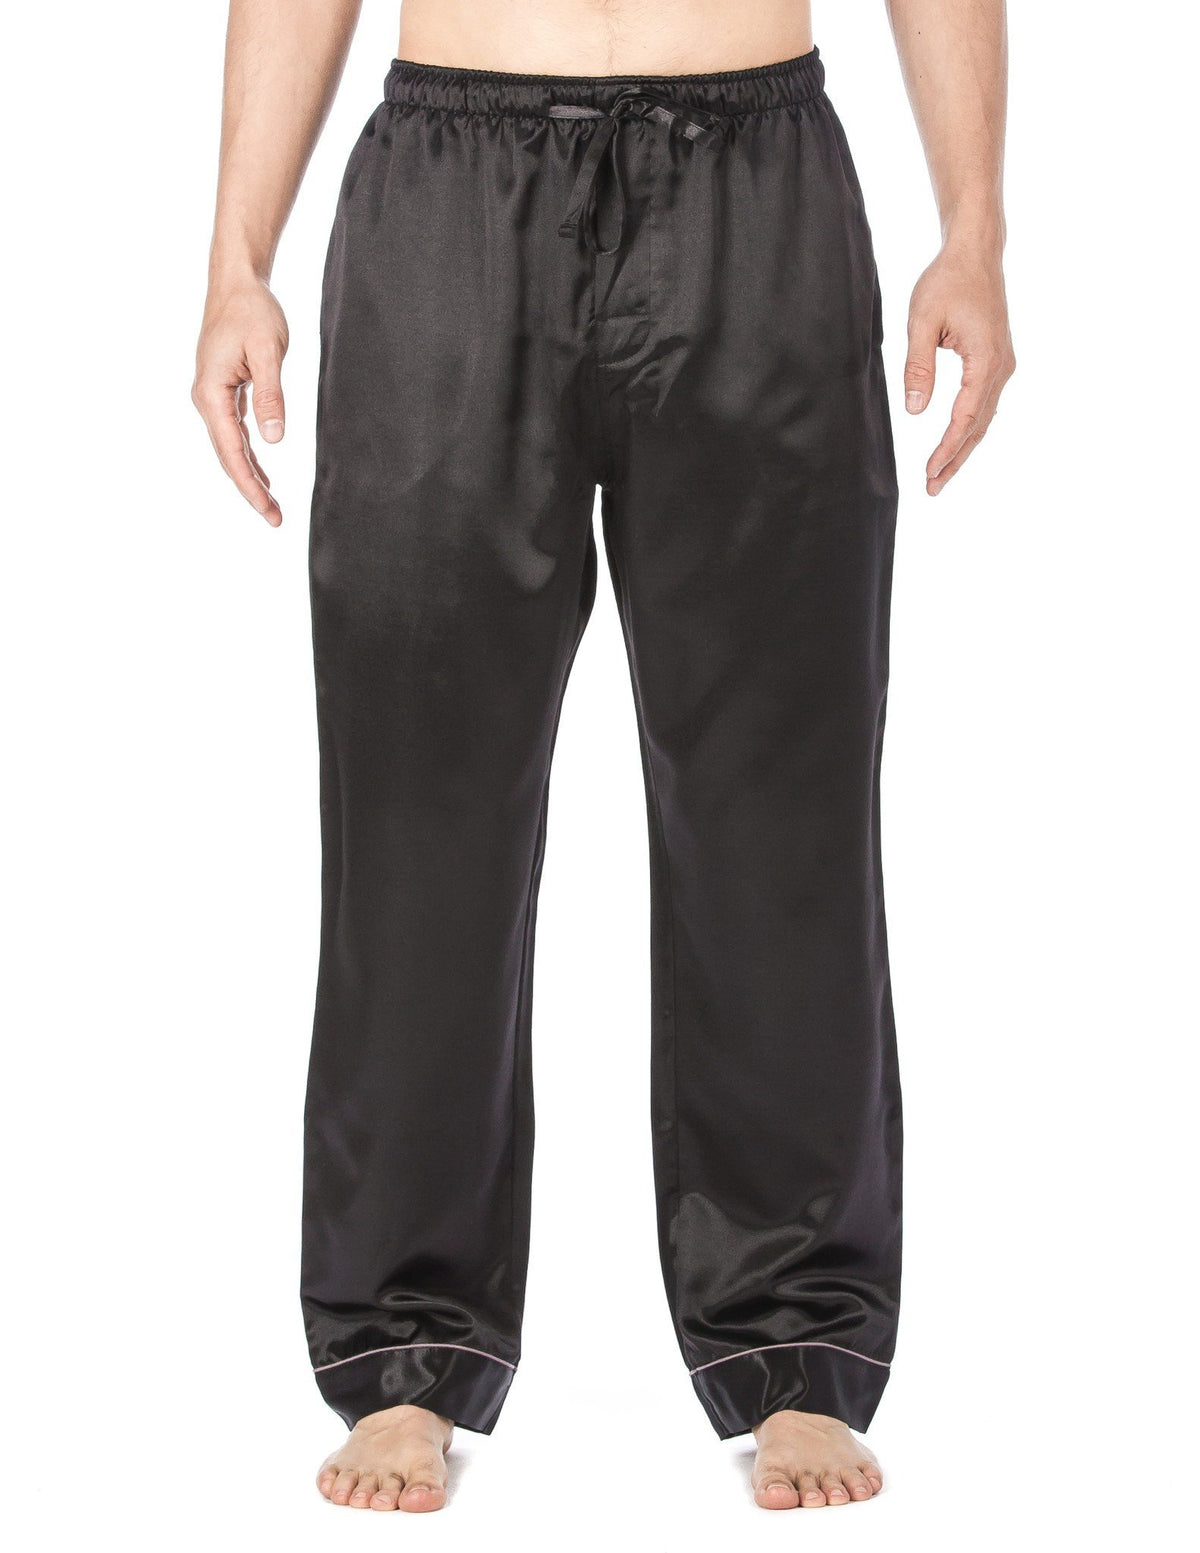 Men's Premium Satin Sleep/Lounge Pants - Solid Black